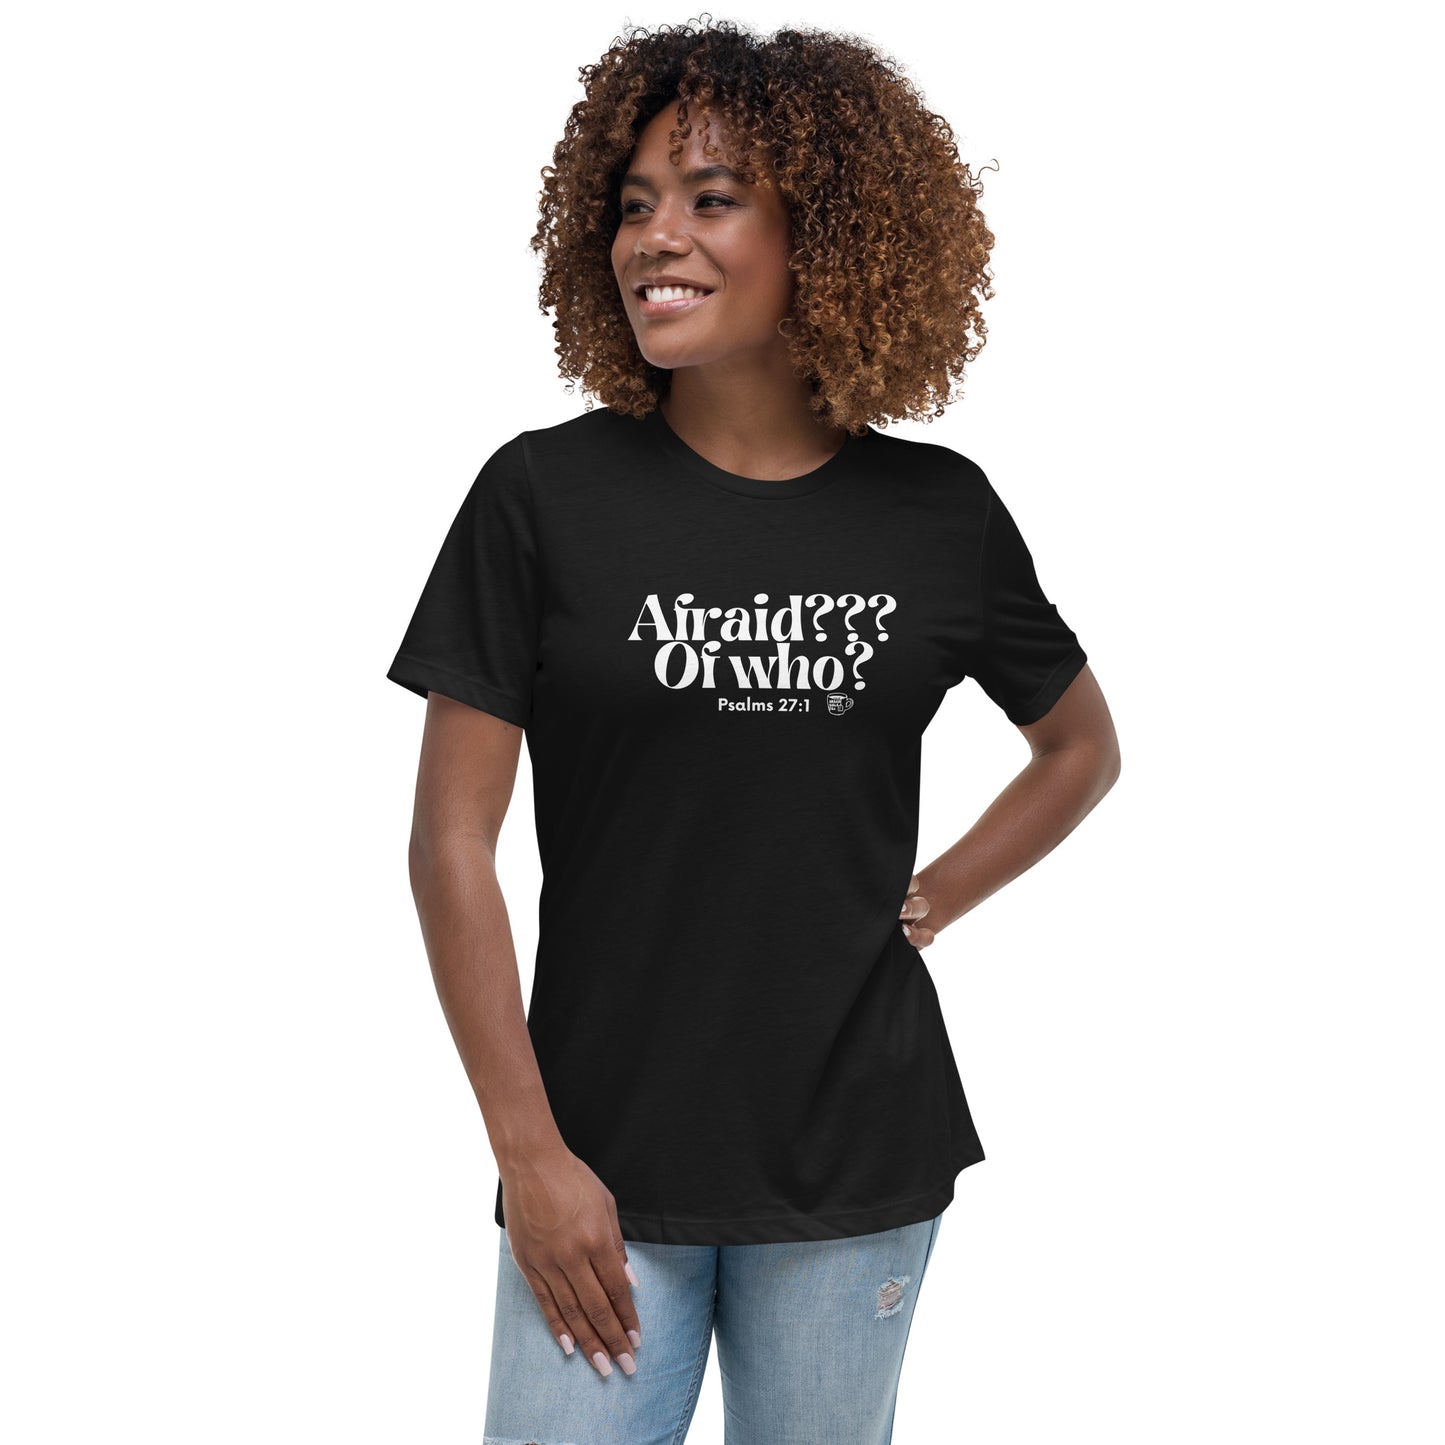 Urban Bible Tea: Afraid??? Of Who? Psalms 27:1 Women's Relaxed T-Shirt